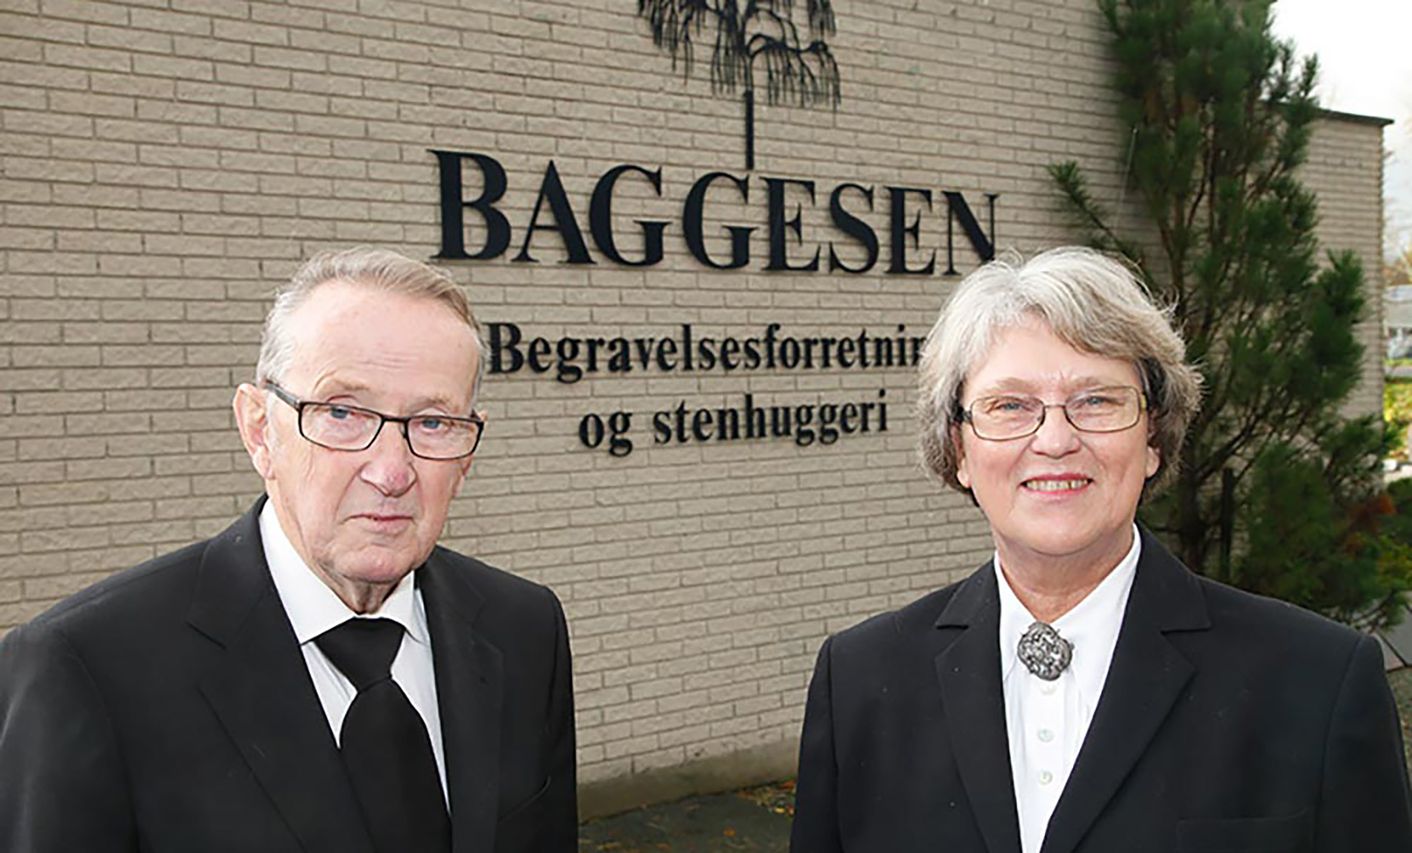 Birgit og Thorvald Baggesen